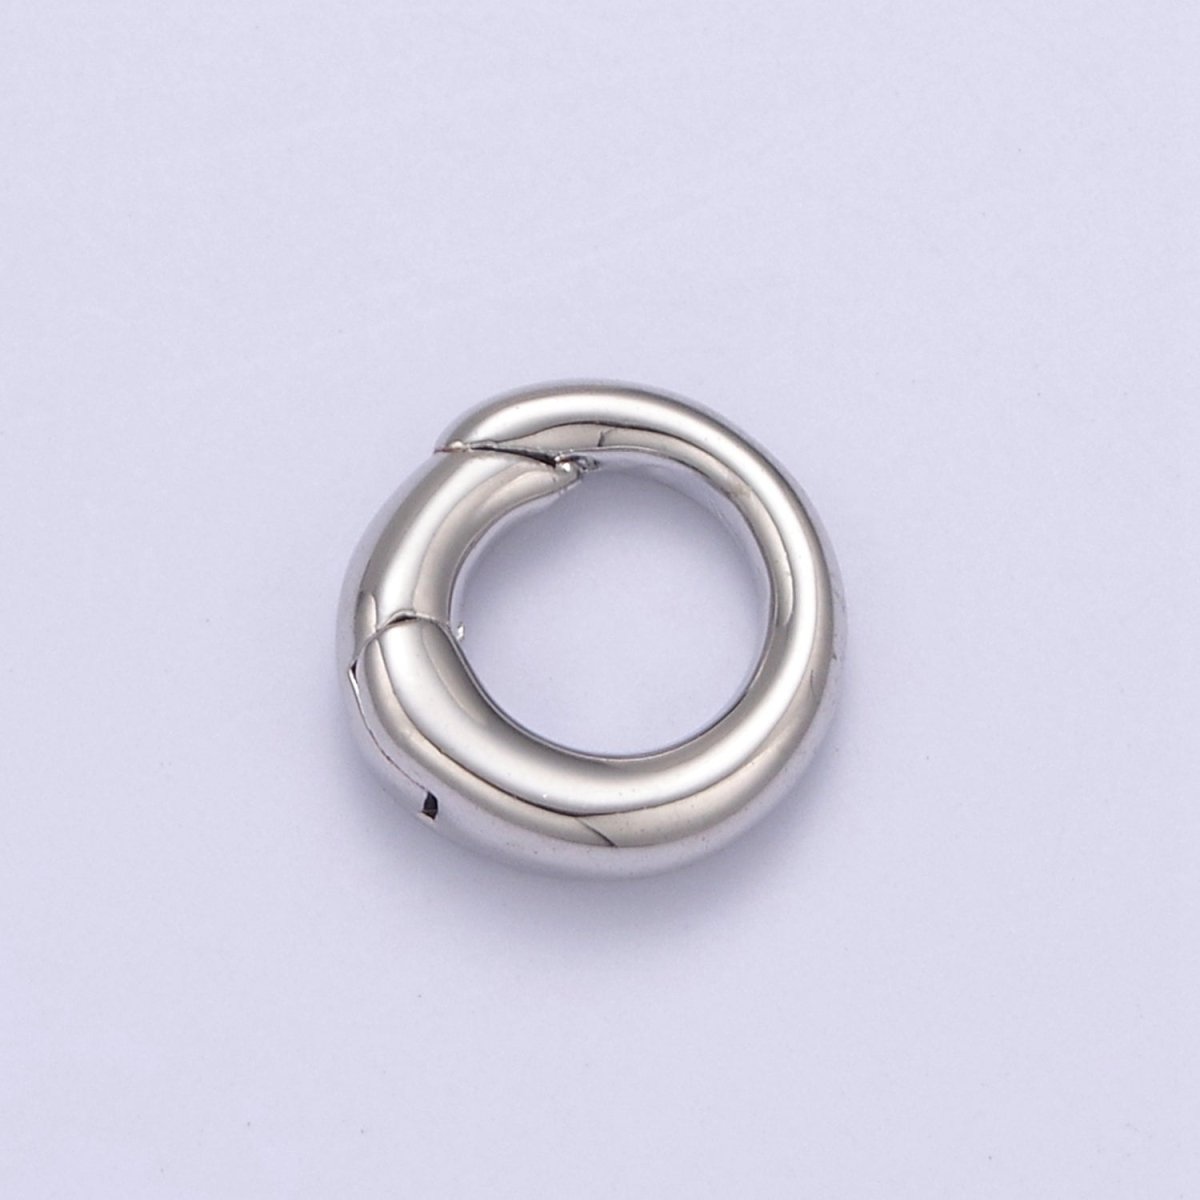 Mini Gold Silver Spring Gate Ring 10mm Round Circle Ring, Round Clasp, Push Clip Clasp, Spring Gate for Jewelry Making L-656 L-657 - DLUXCA